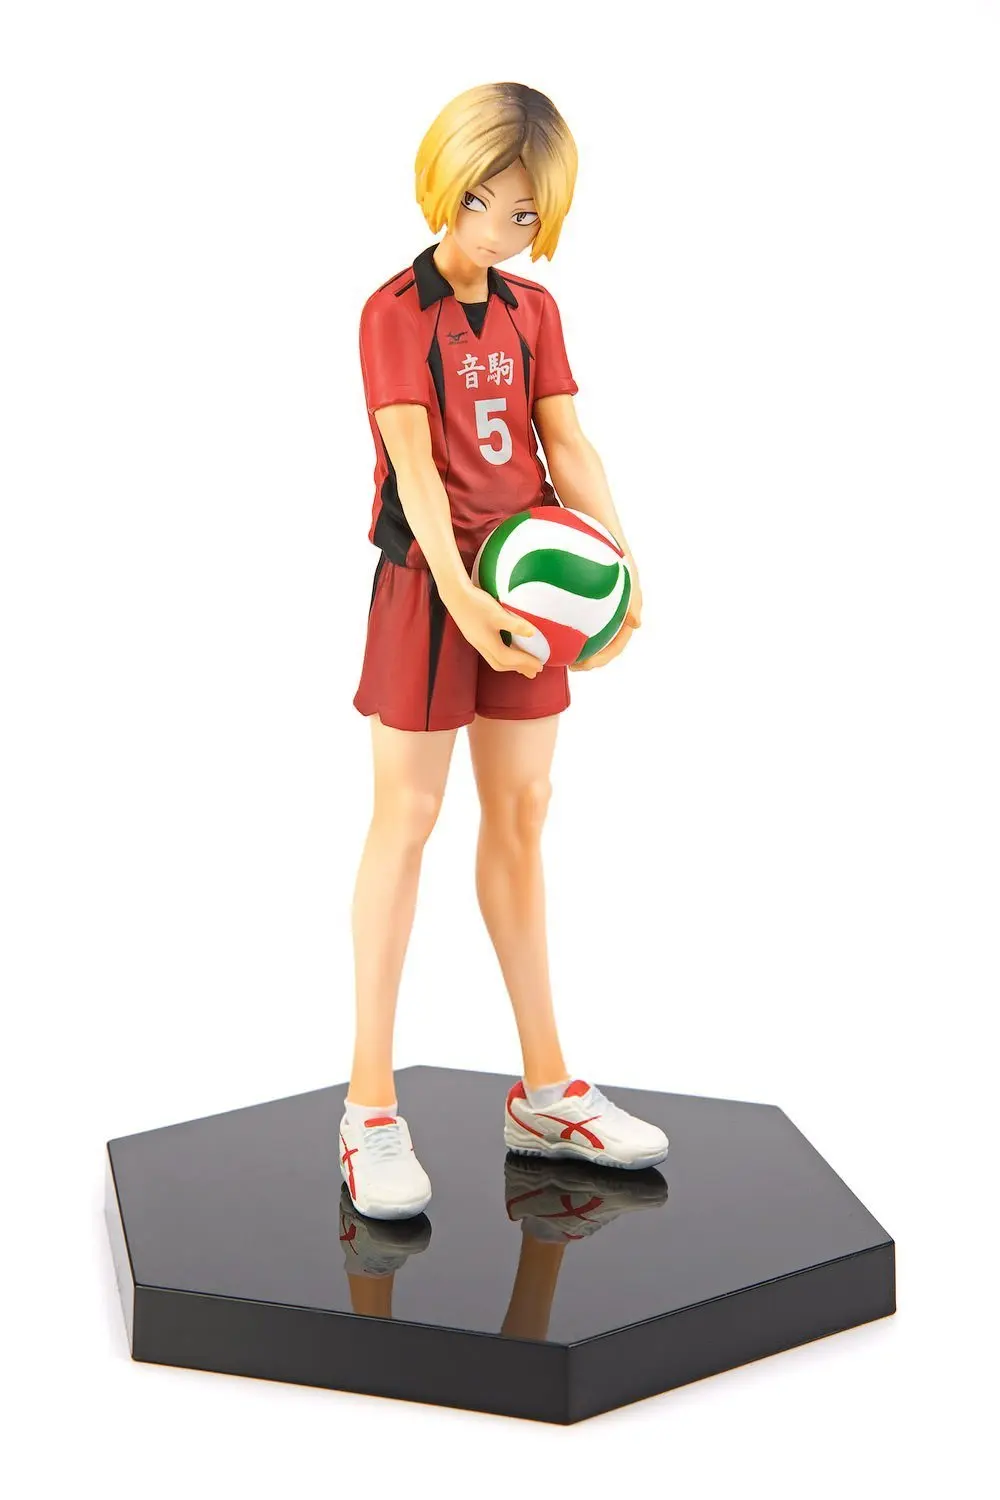 Buy P0508 Free Shipping Haikyuu Kenma Kozume Nekoma 5 1 Setter Cosplay Costume Volleyball Club Jerseys New Retail Wholesales In Cheap Price On M Alibaba Com - roblox volleyball uniforms